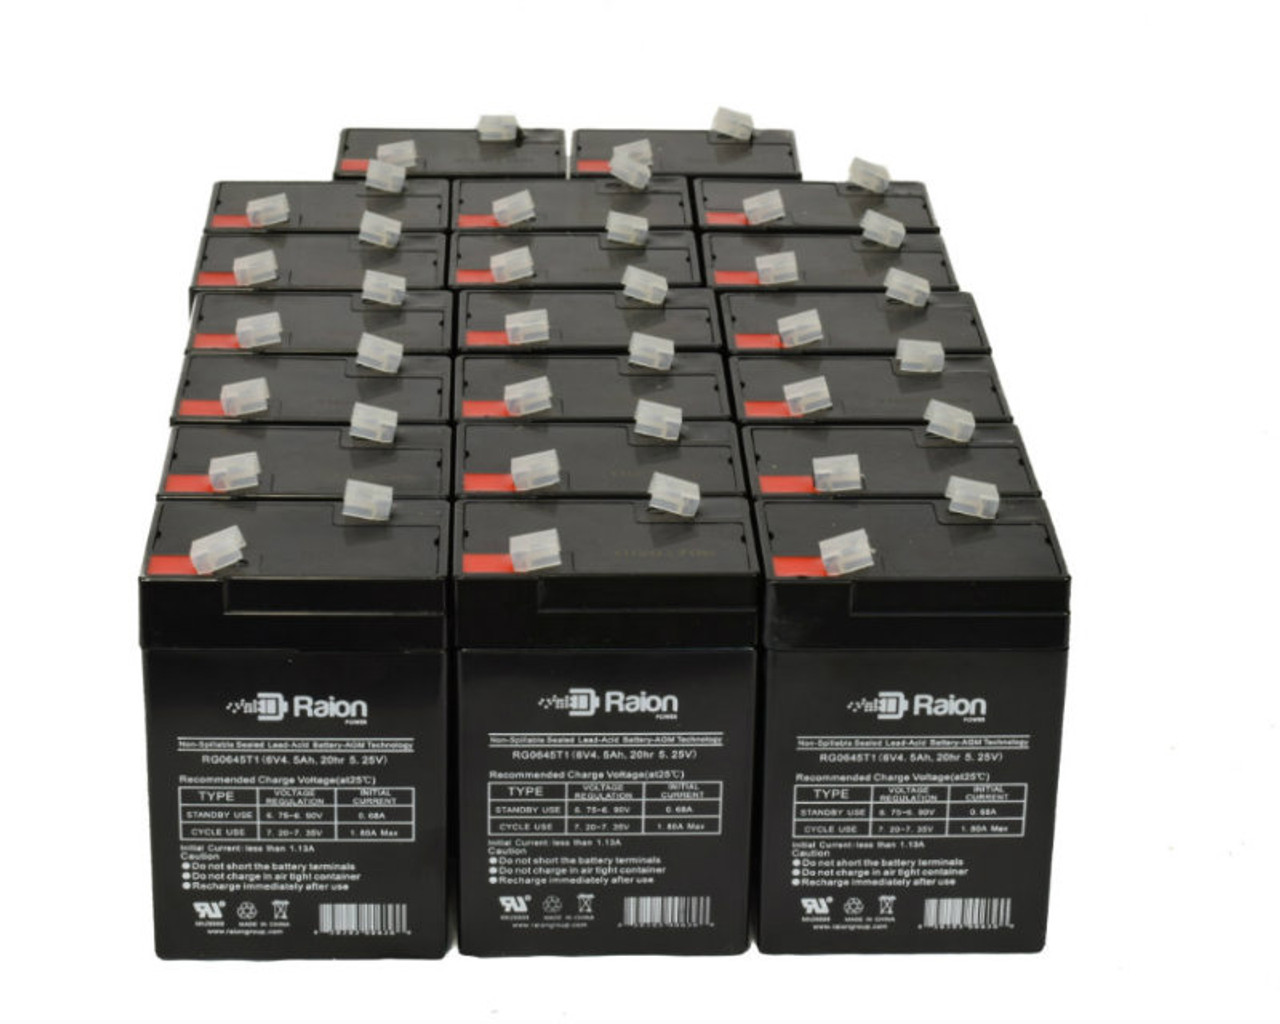 Raion Power 6V 4.5Ah Replacement Emergency Light Battery for Teledyne Big Beam 1180005 - 20 Pack